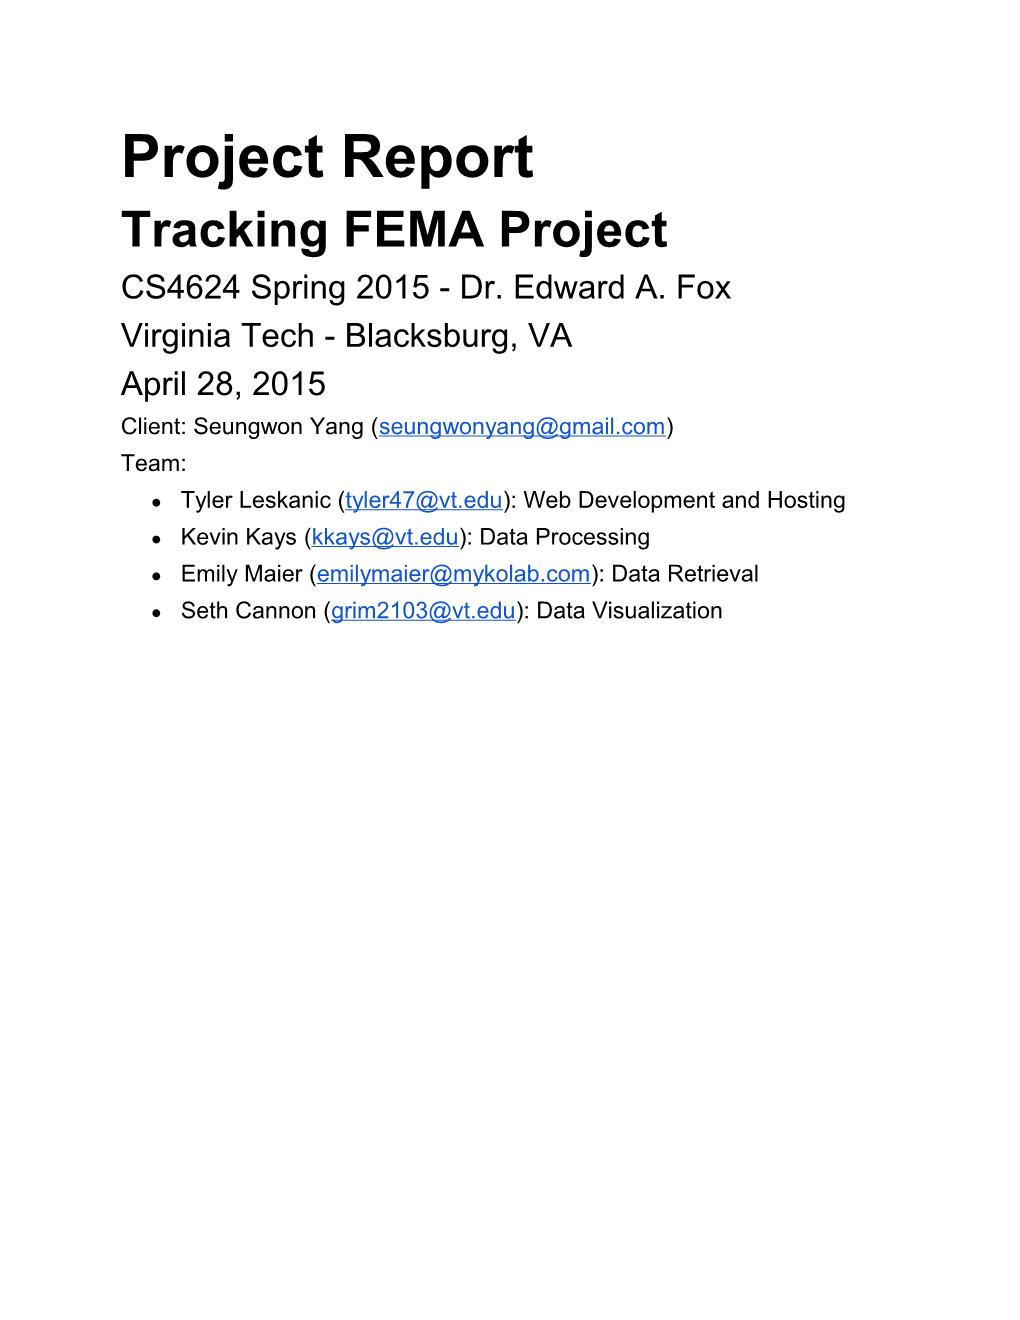 Tracking FEMA Project